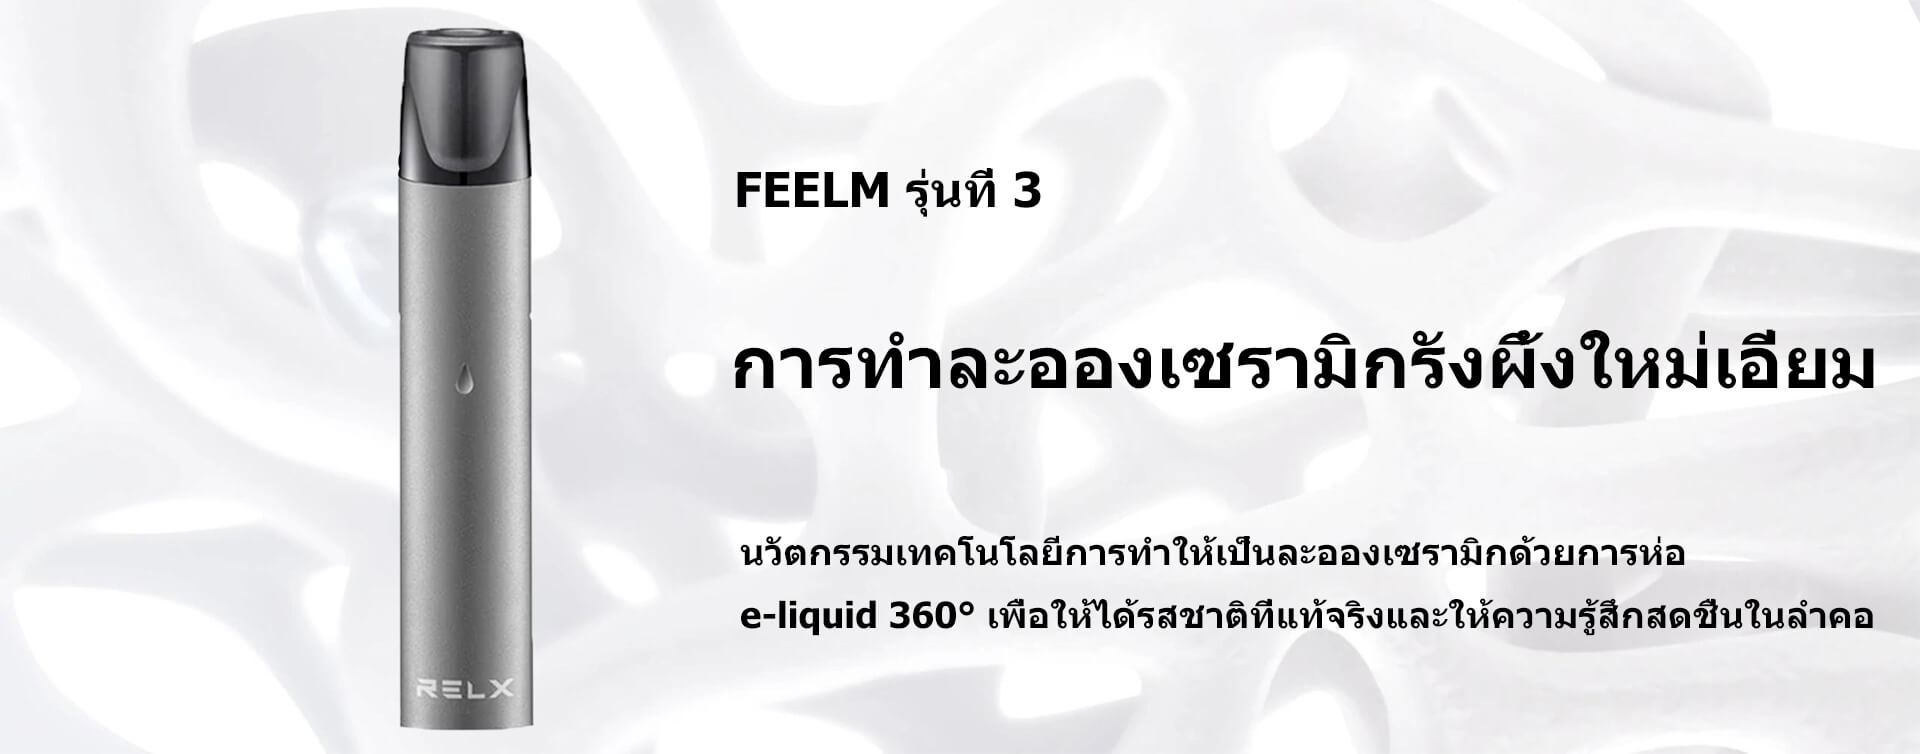 RELX Phantom รุ่นใหม่ 5th Generation​ | RELX Thailand RELX Classic Device | อุปกรณ์คลาสสิก RELX - ซันเซ็ทโกลว์